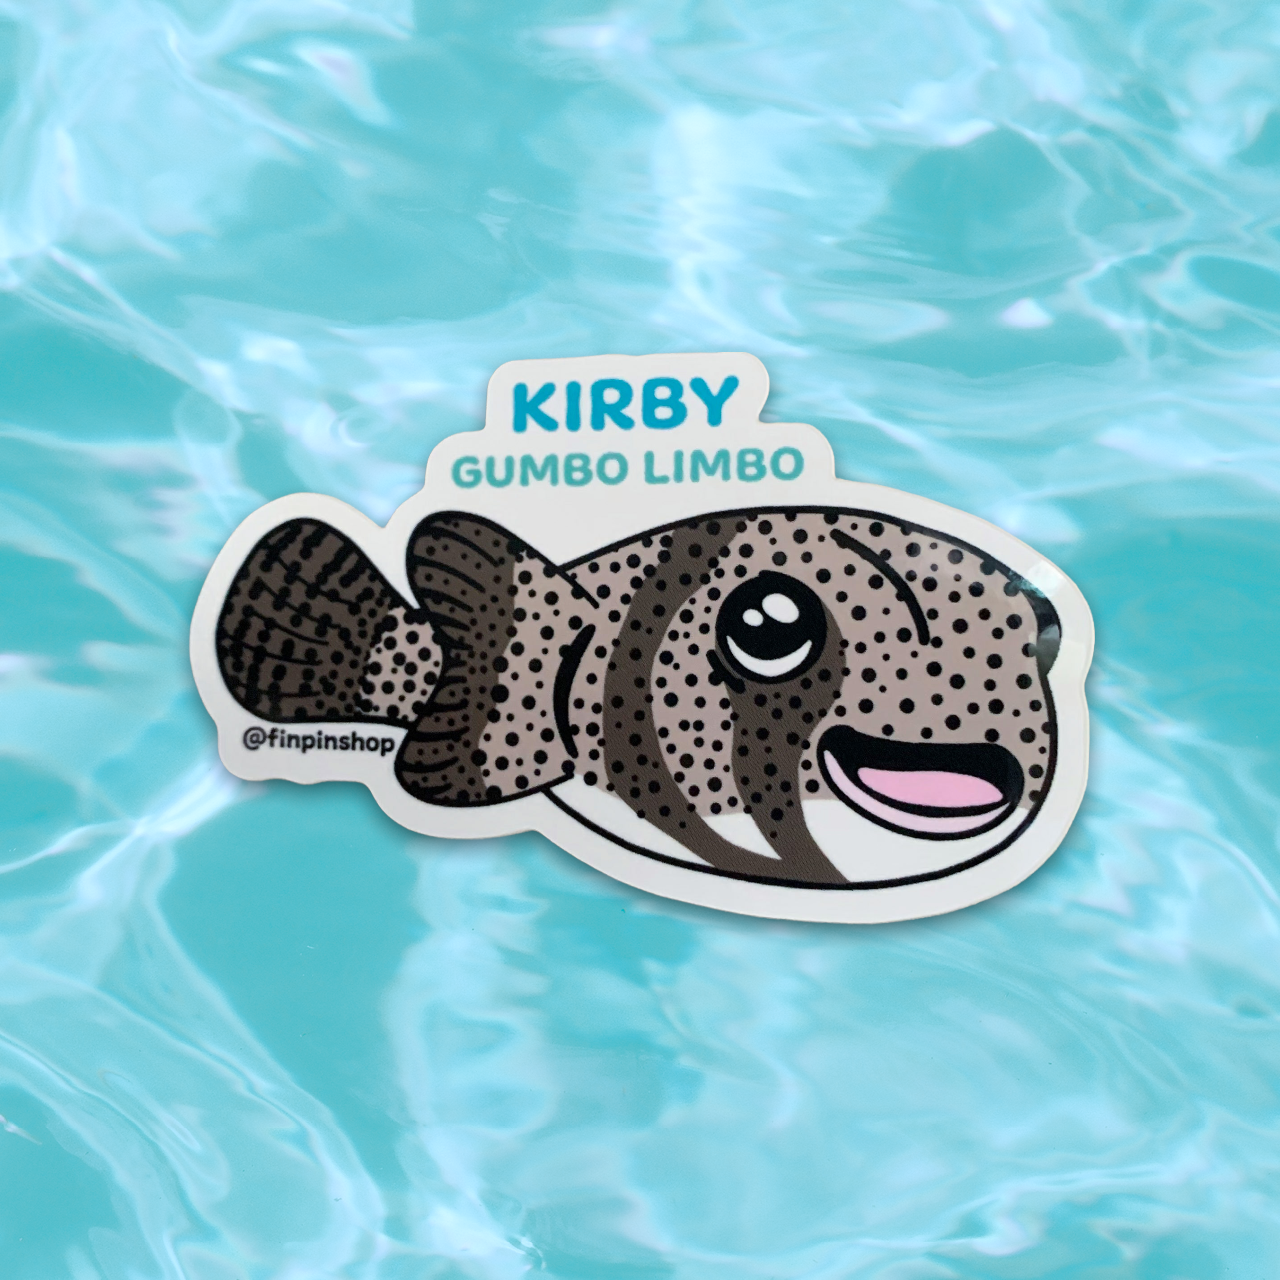 gumbo limbo kirby the porcupine fish donation sticker